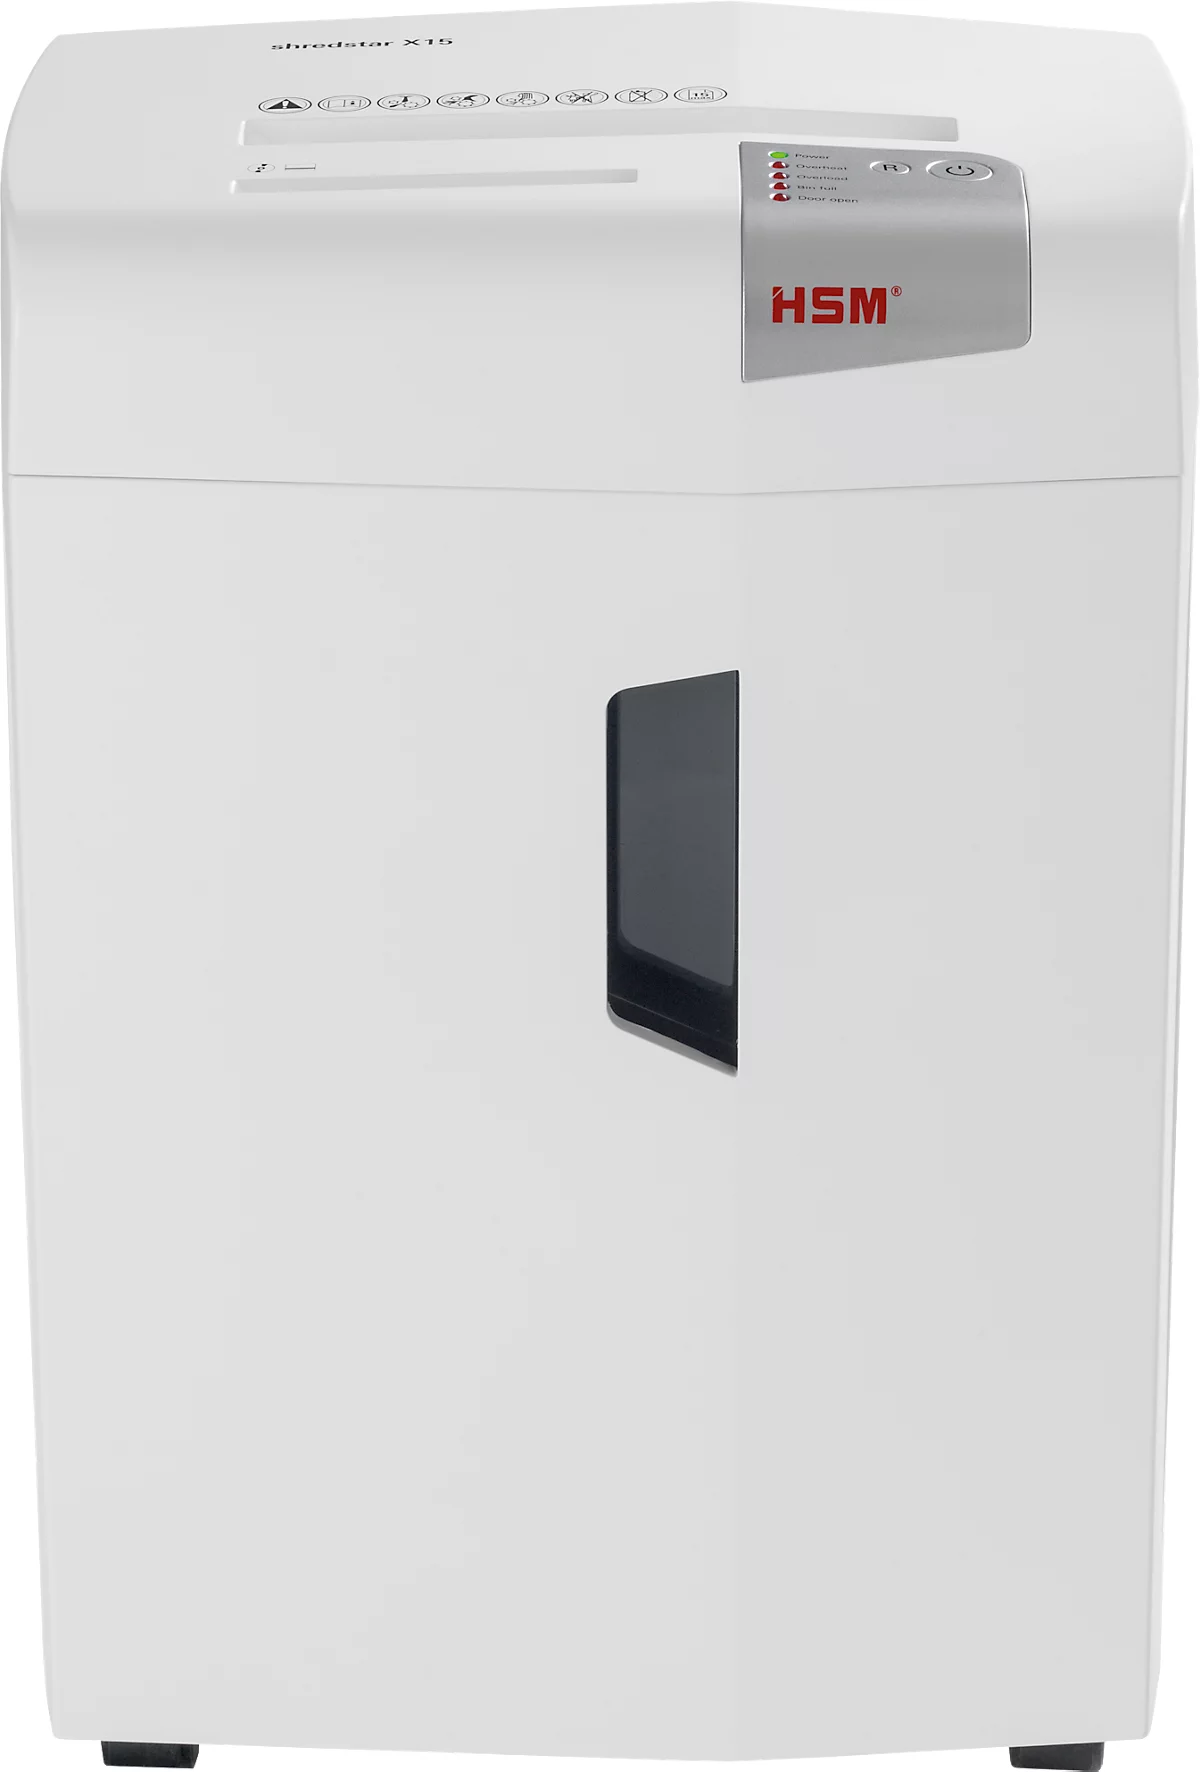 Aktenvernichter HSM shredstar X15, Sicherheitsstufe 4, Partikelschnitt 4 x 37 mm, 15 Blatt, weiß/silber